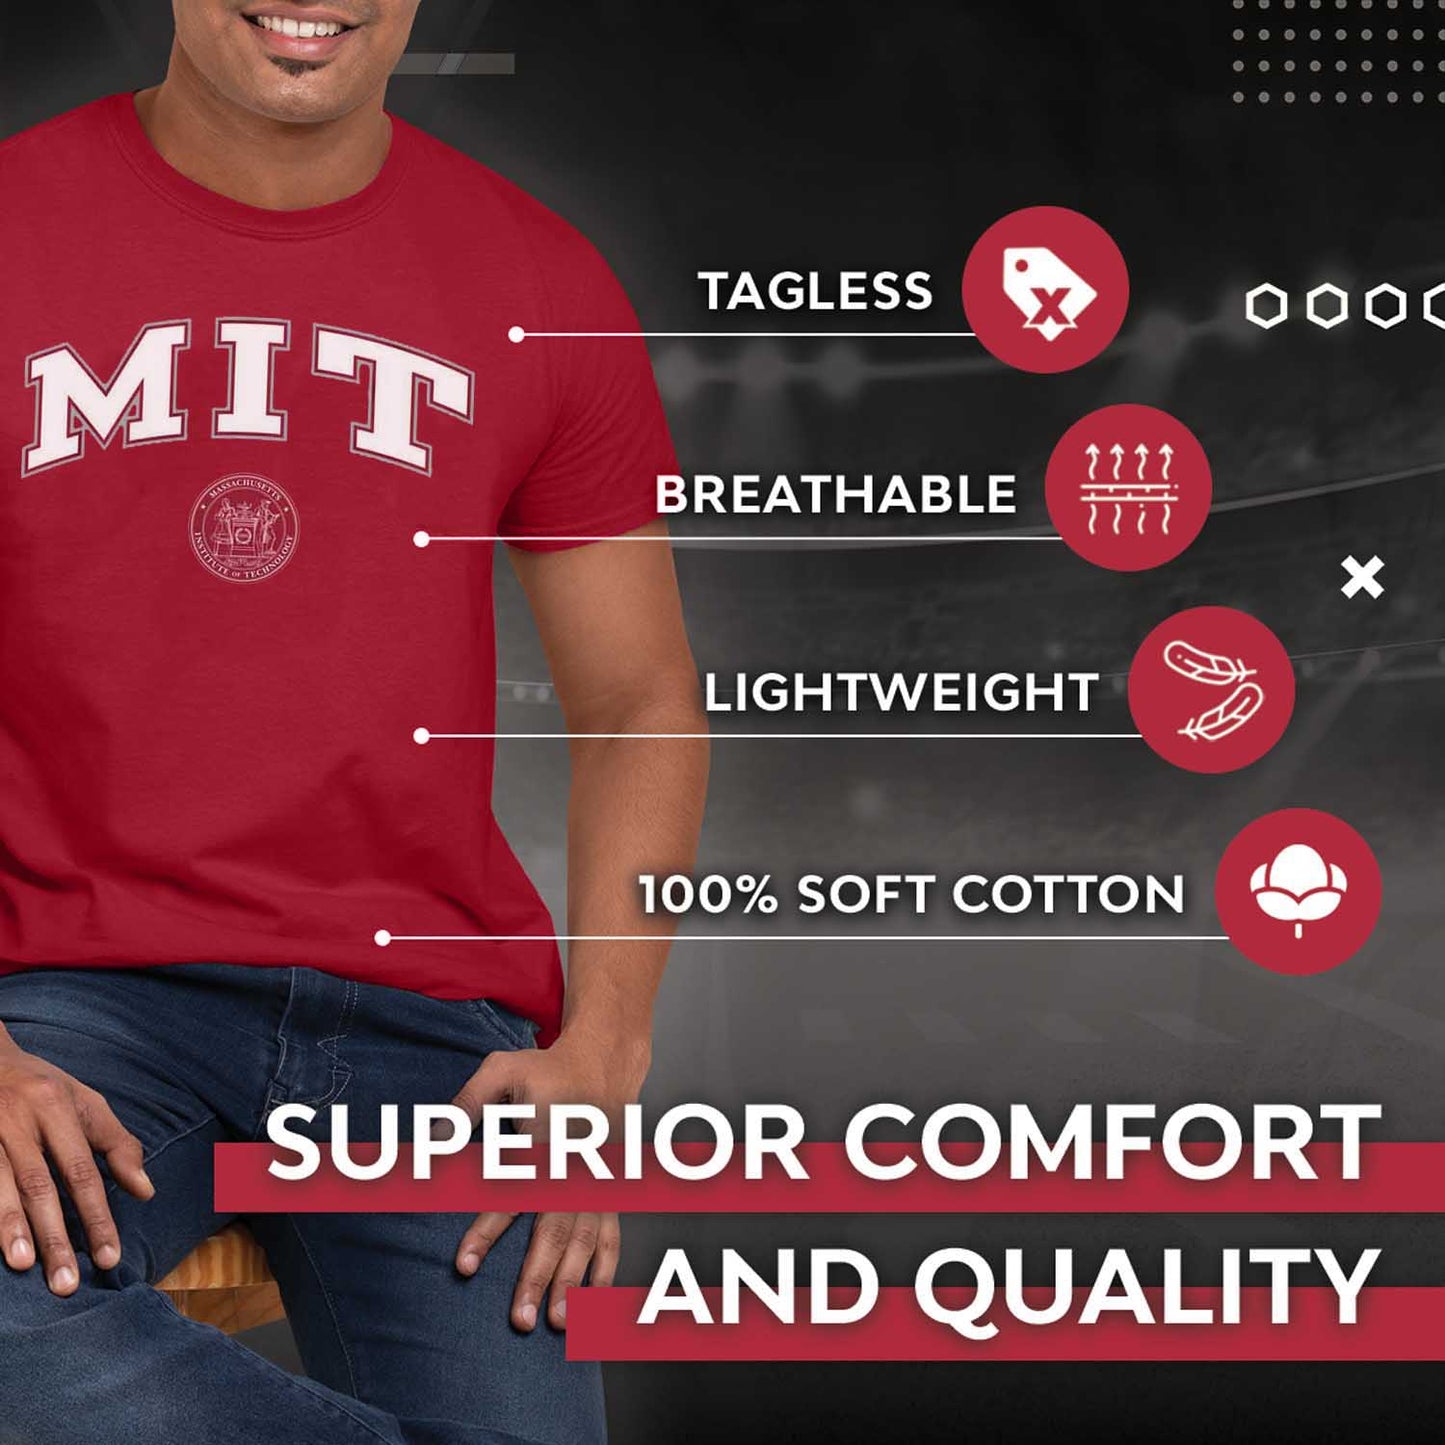 MIT Engineers NCAA Adult Gameday Cotton T-Shirt - Cardinal